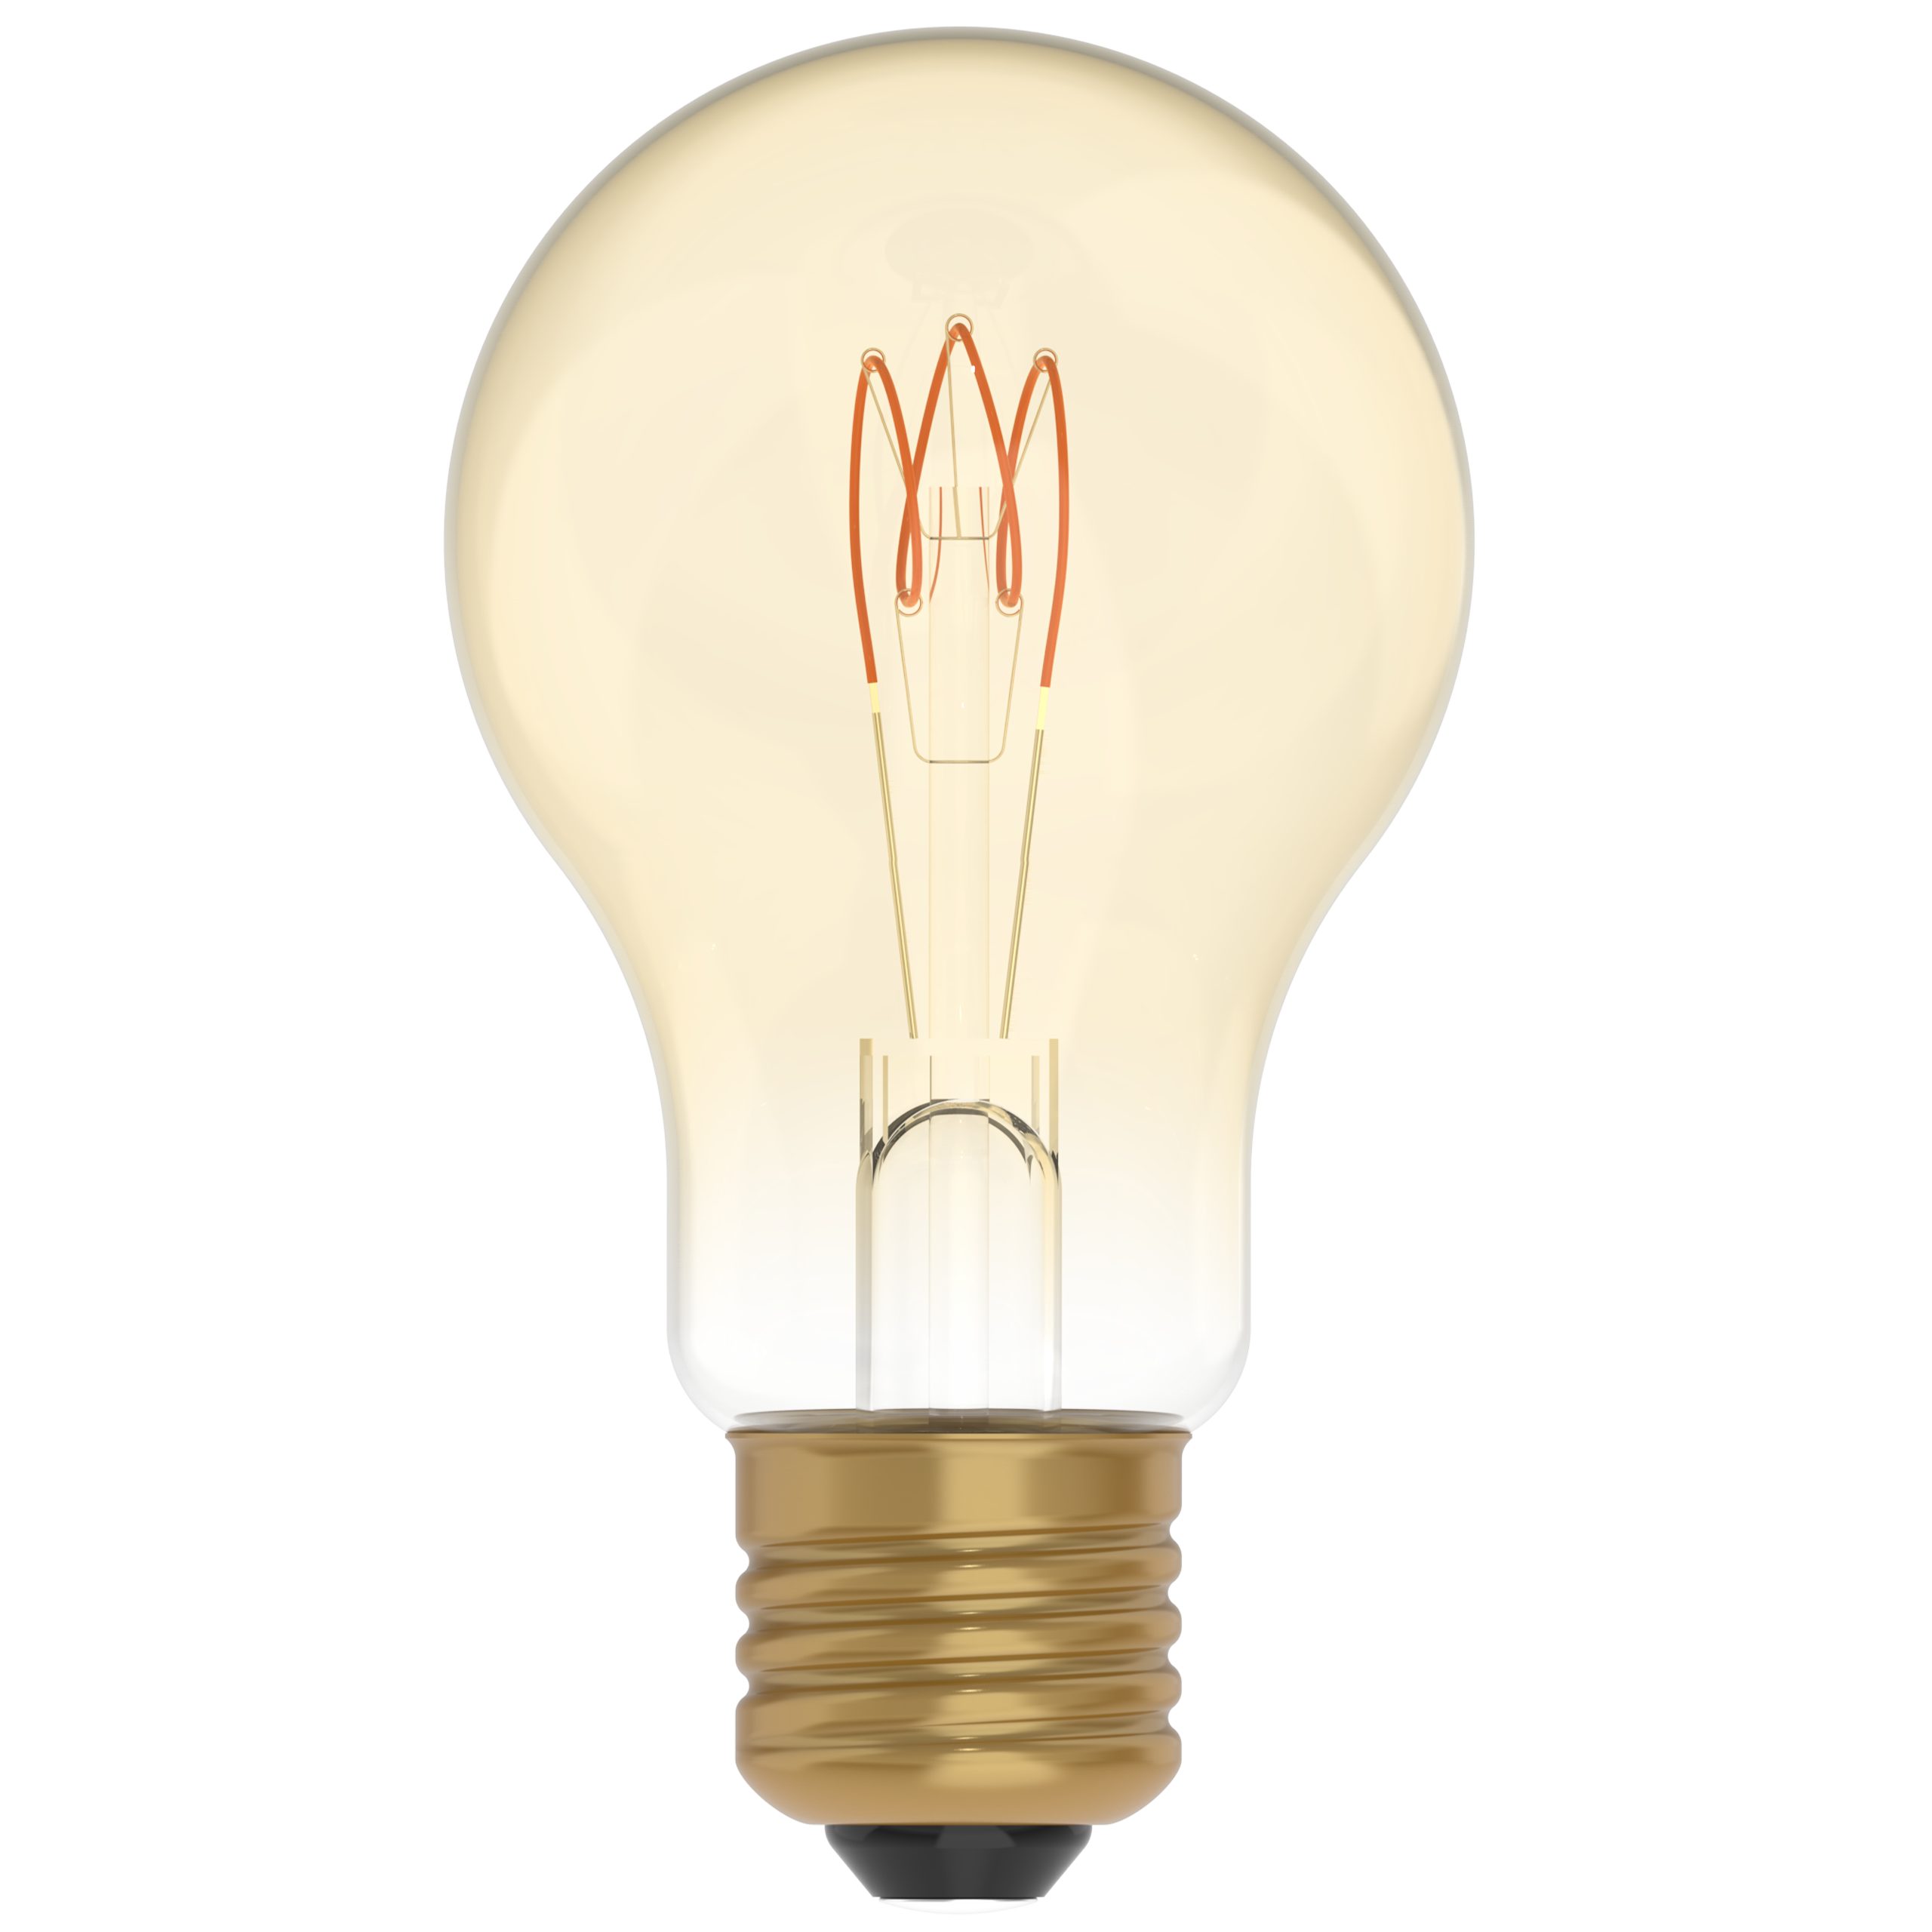 LED's light LED-Leuchtmittel 0620193 LED Glühbirne, E27, E27 dimmbar 2.5W extra-warmweiß Gold A60